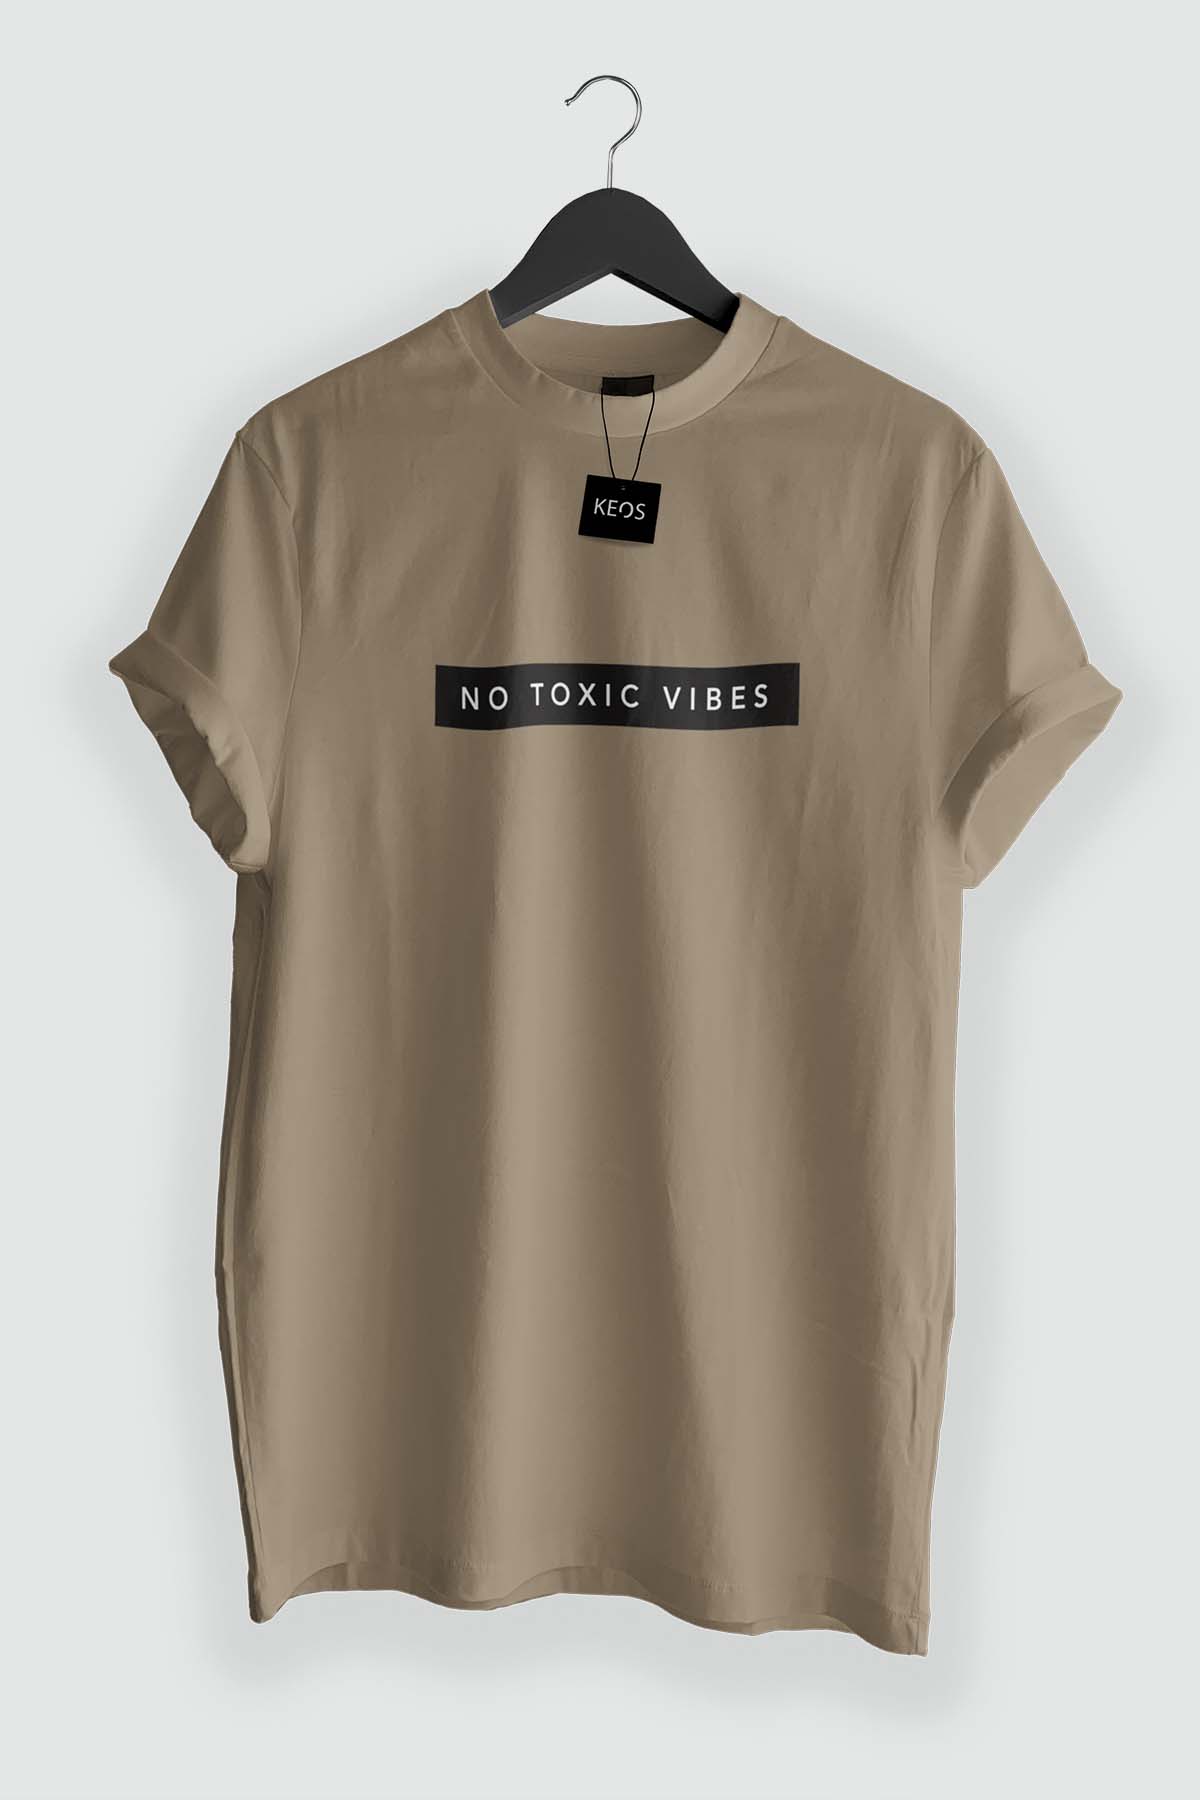 No Toxic Vibes Organic Cotton T-shirt - keos.life